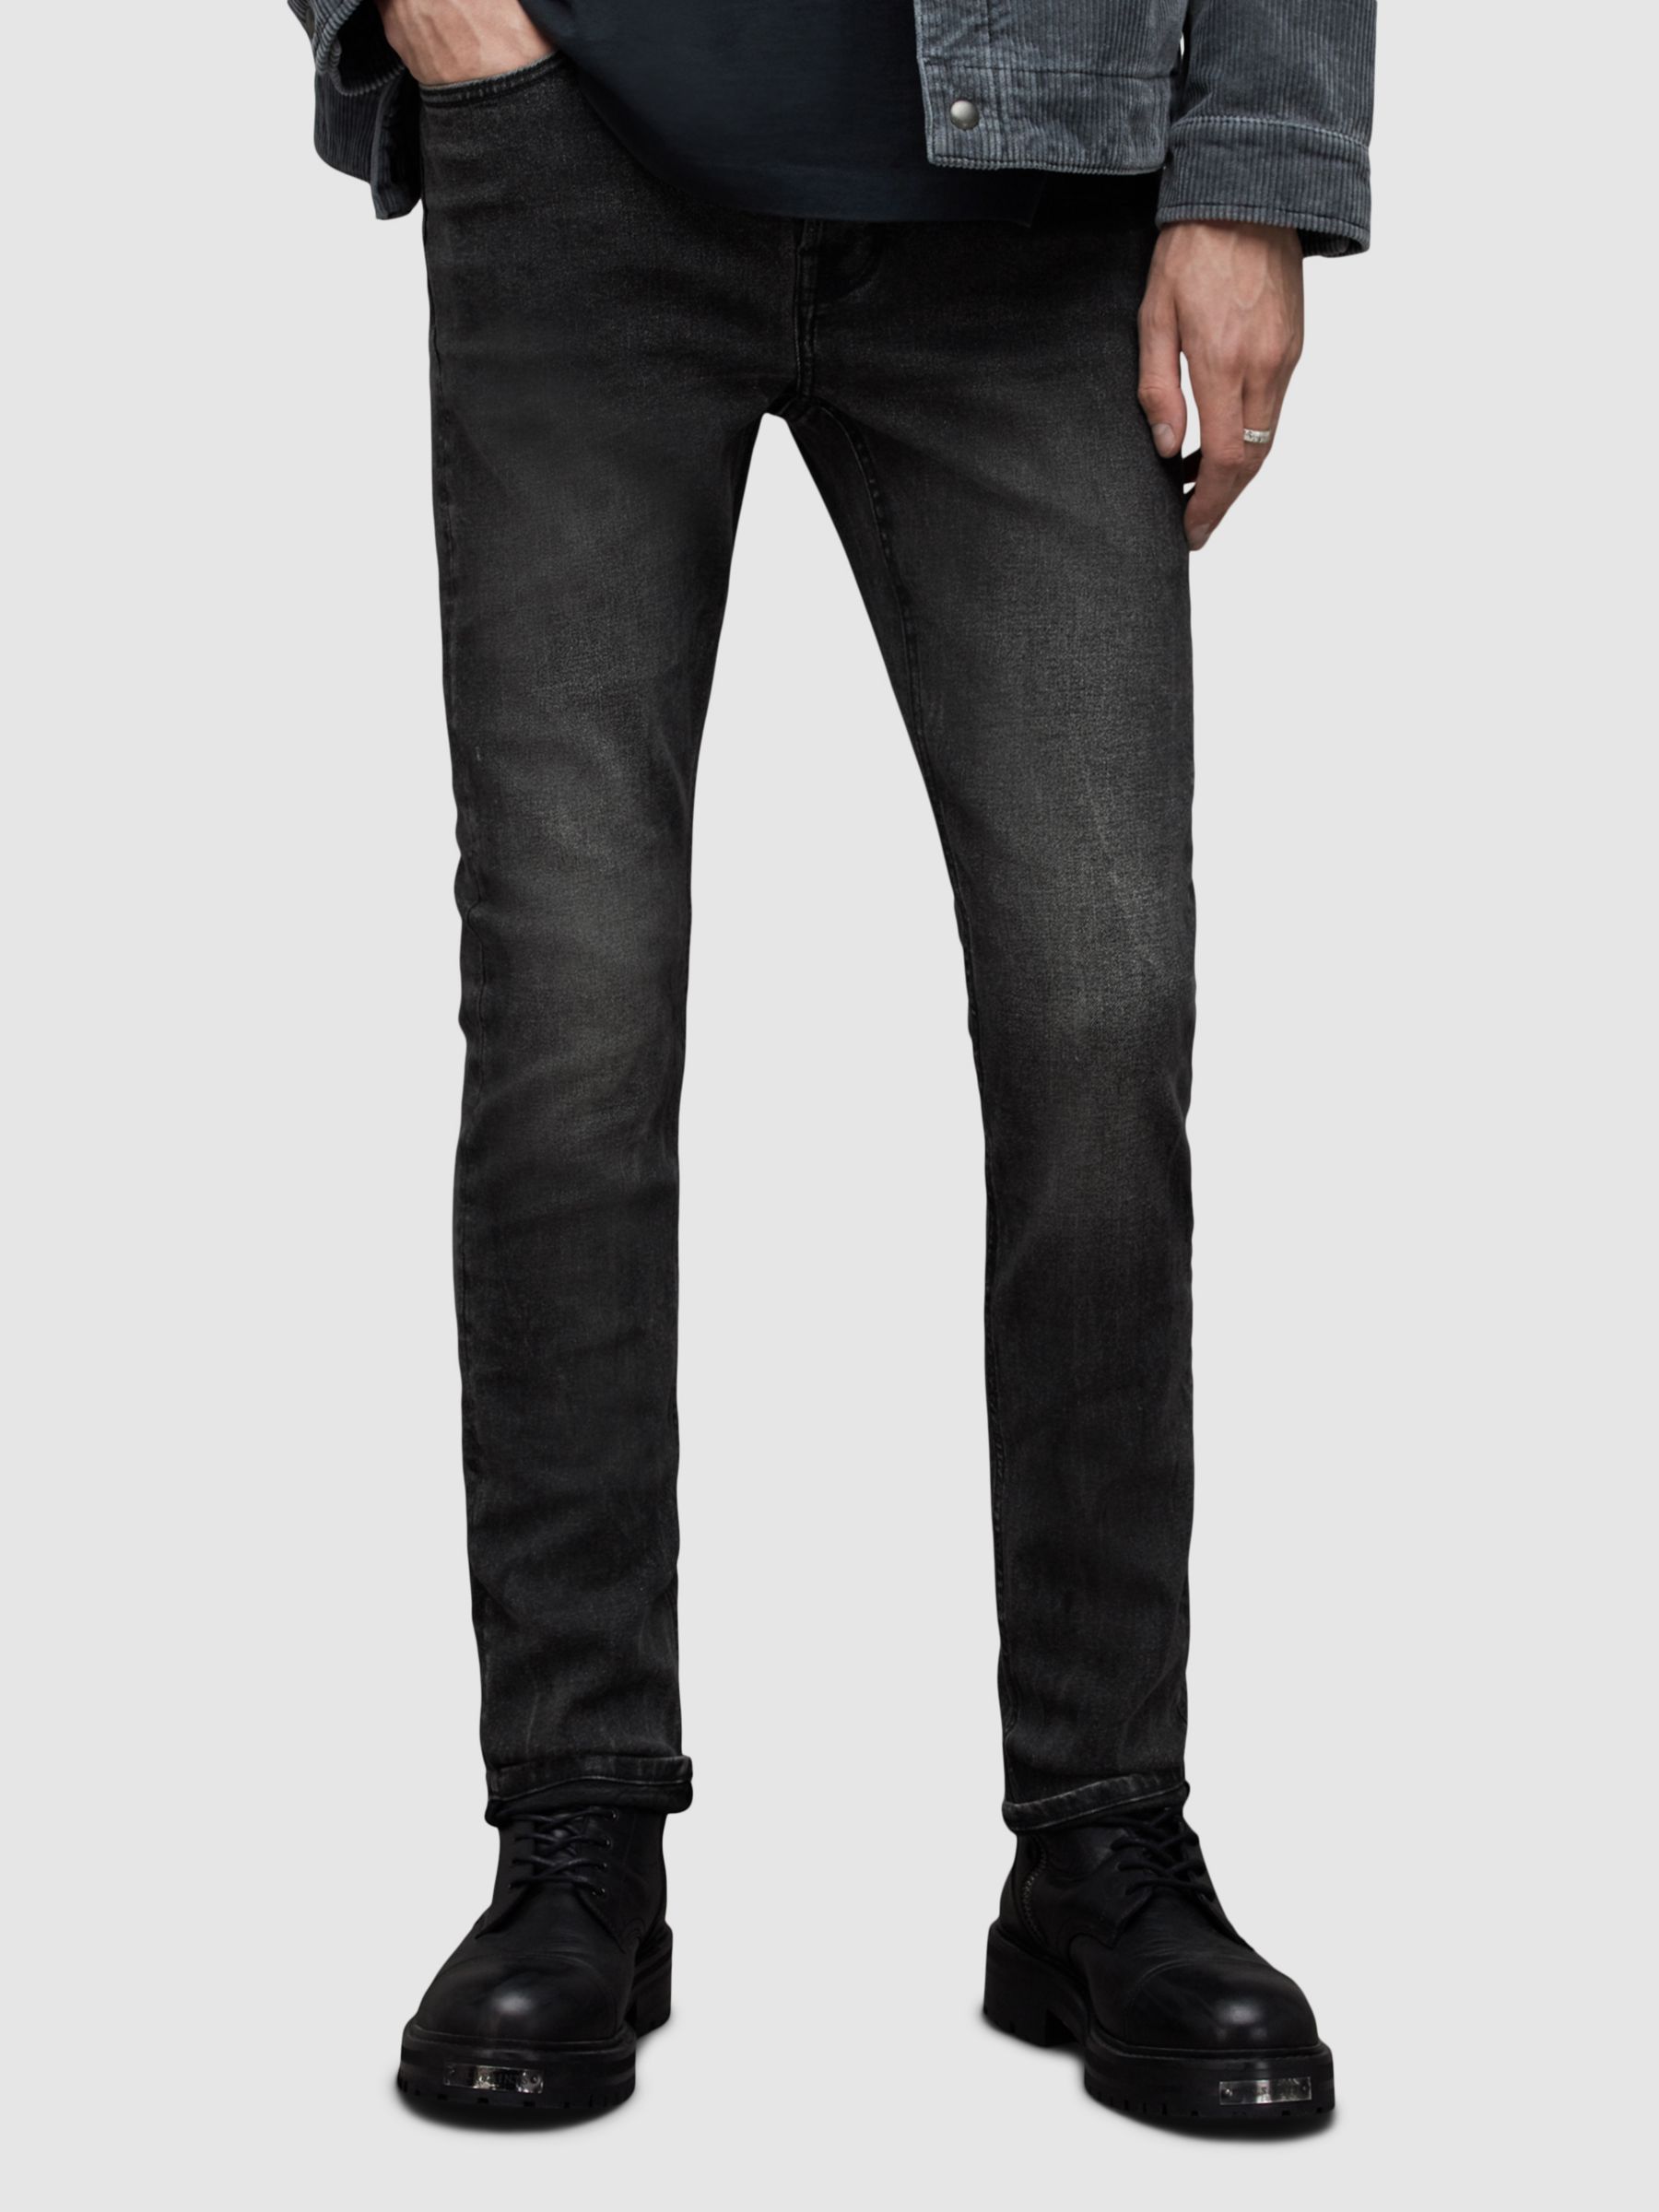 AllSaints Cigarette Skinny Fit Jeans, Washed Black, W28/L30